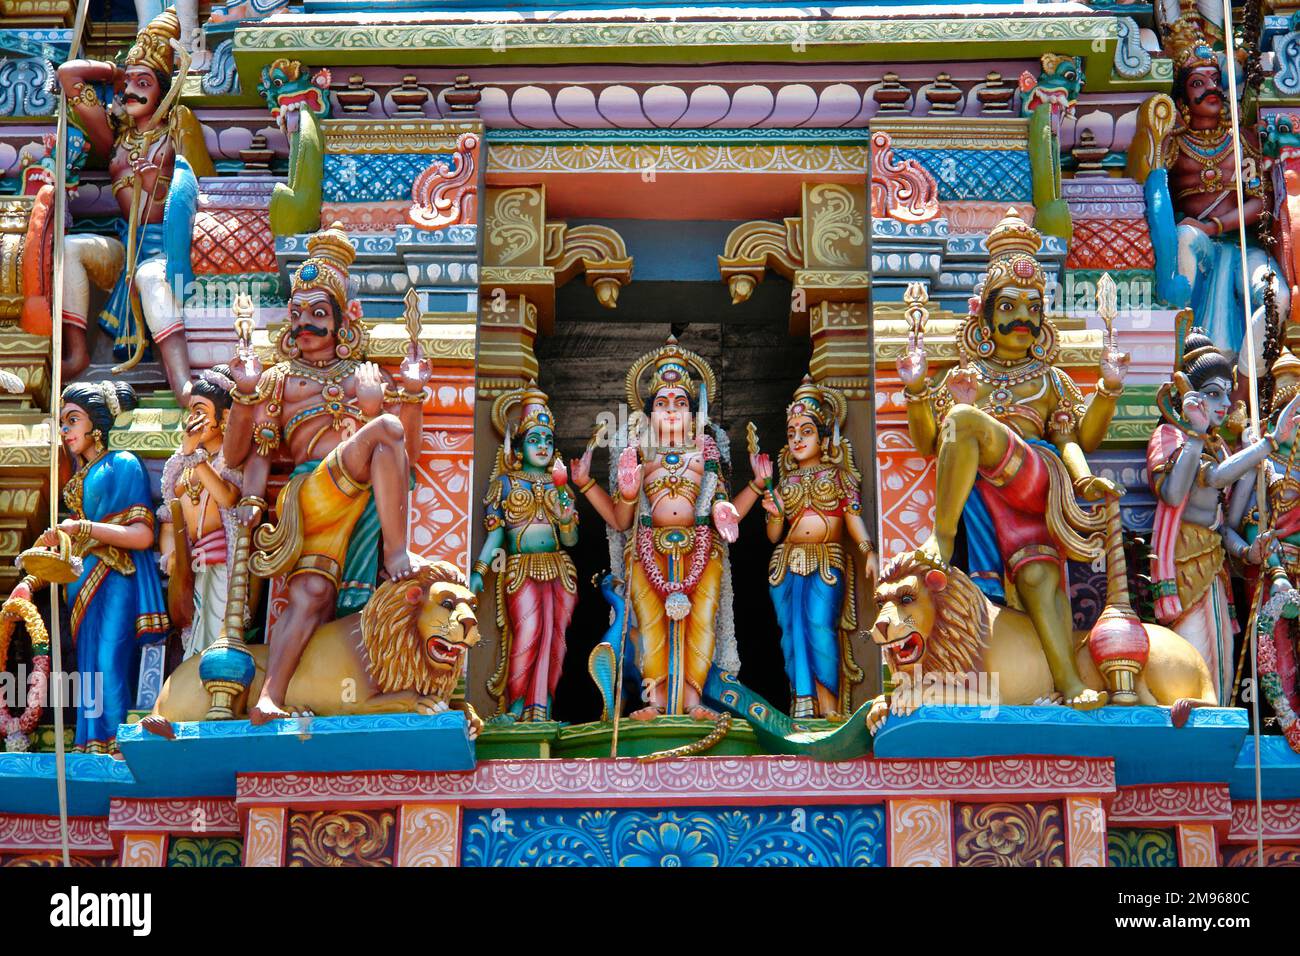 Sculptures at the Sri Sivasubramaniya Swamy Temple in Colombo, Sri Lanka -- a venue for the annual Hindu Vel Festival. Stock Photo